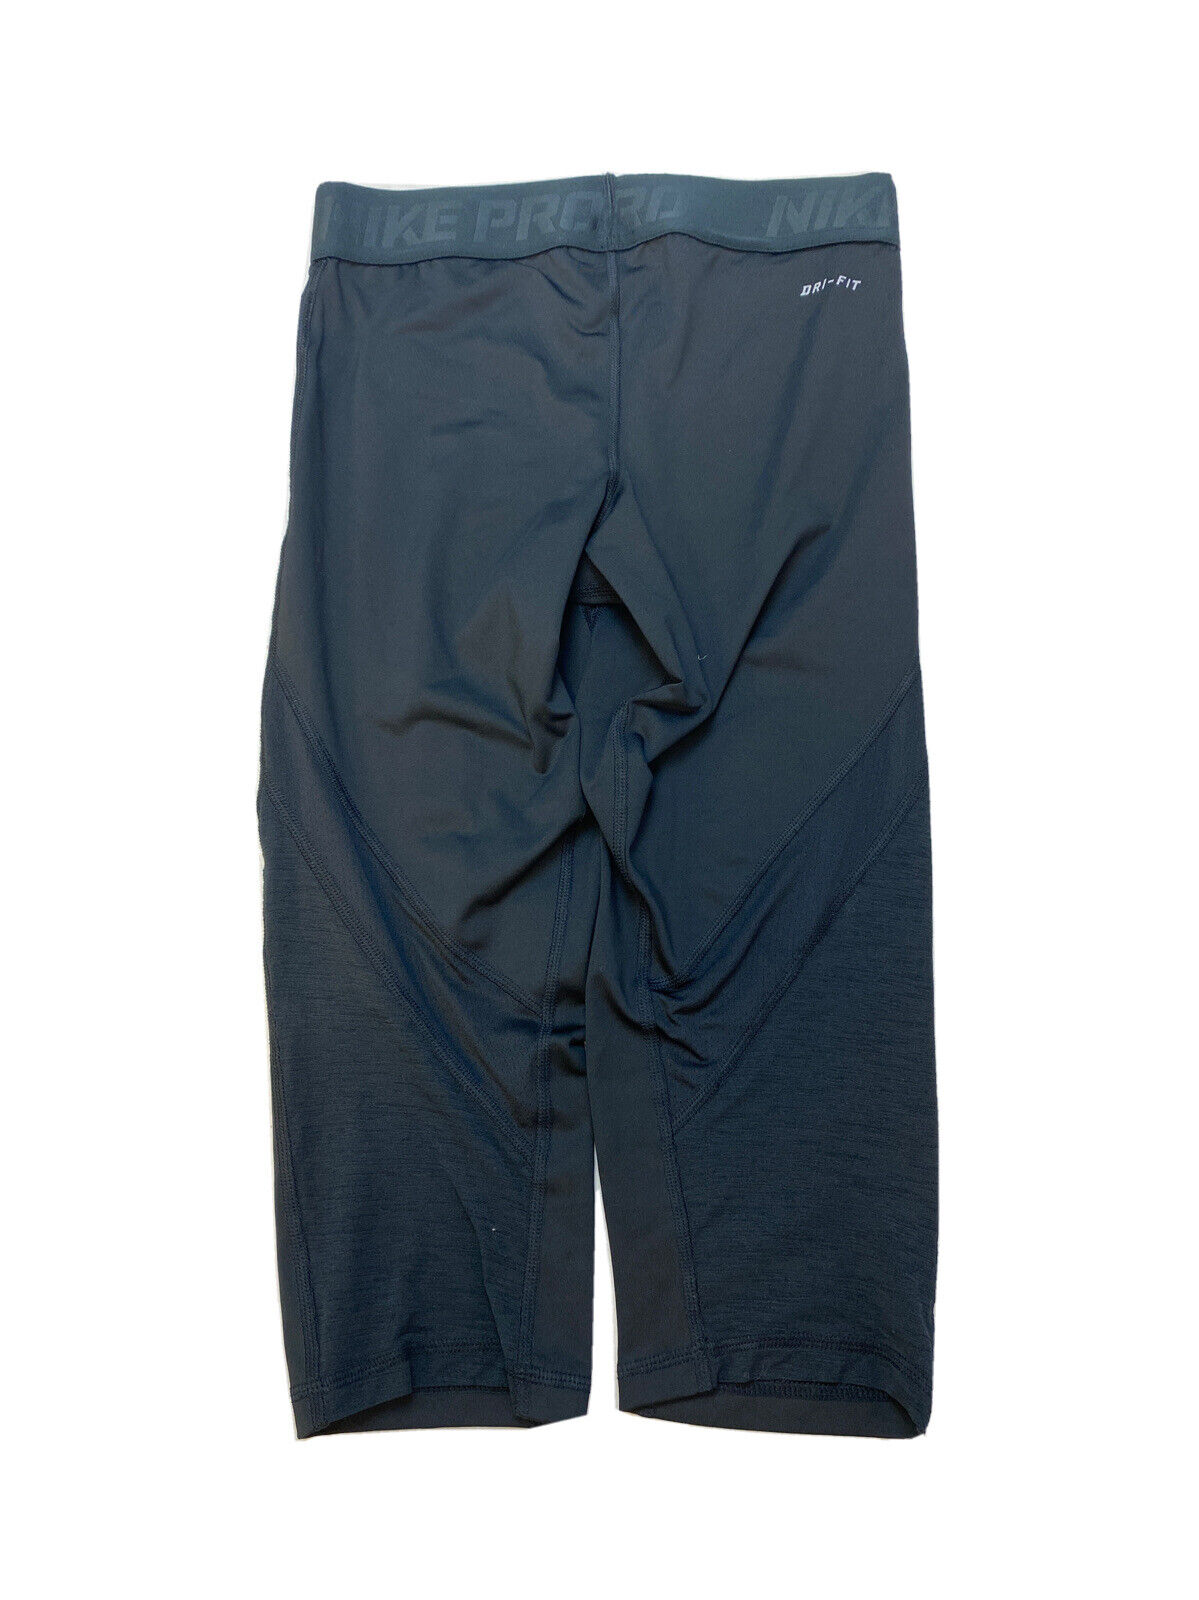 Nike Pro Capri Hypercool Flash - Pantalones de compresión para mujer, talla S